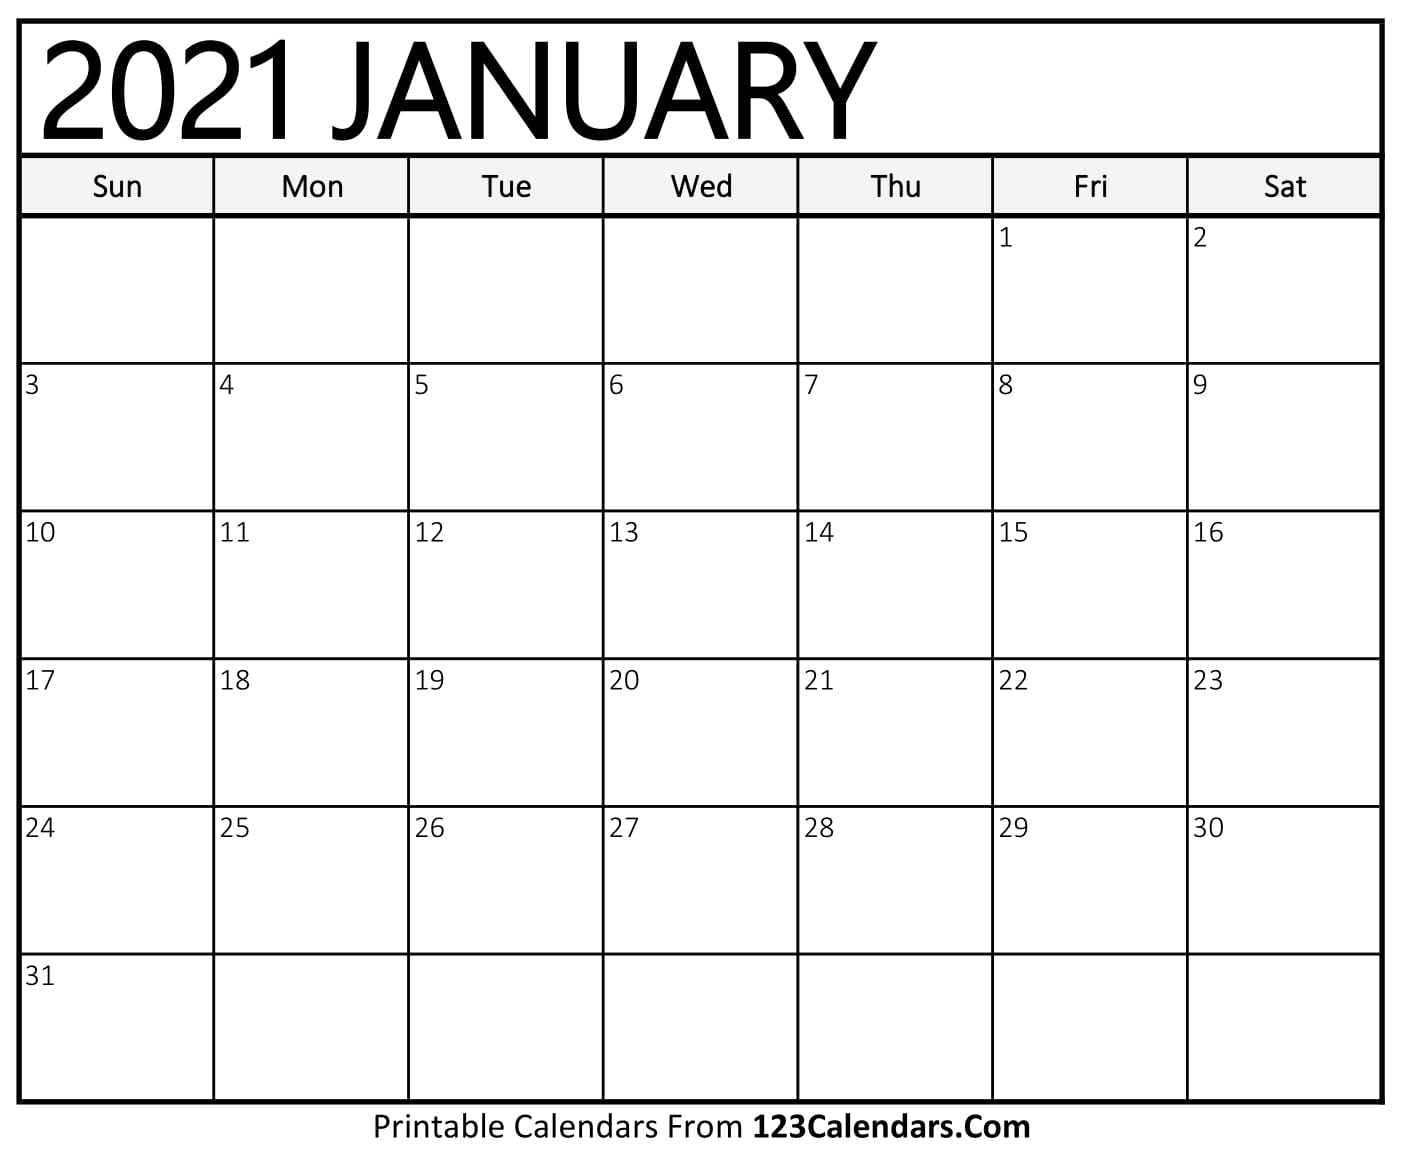 2021 Printable Calendar | 123Calendars